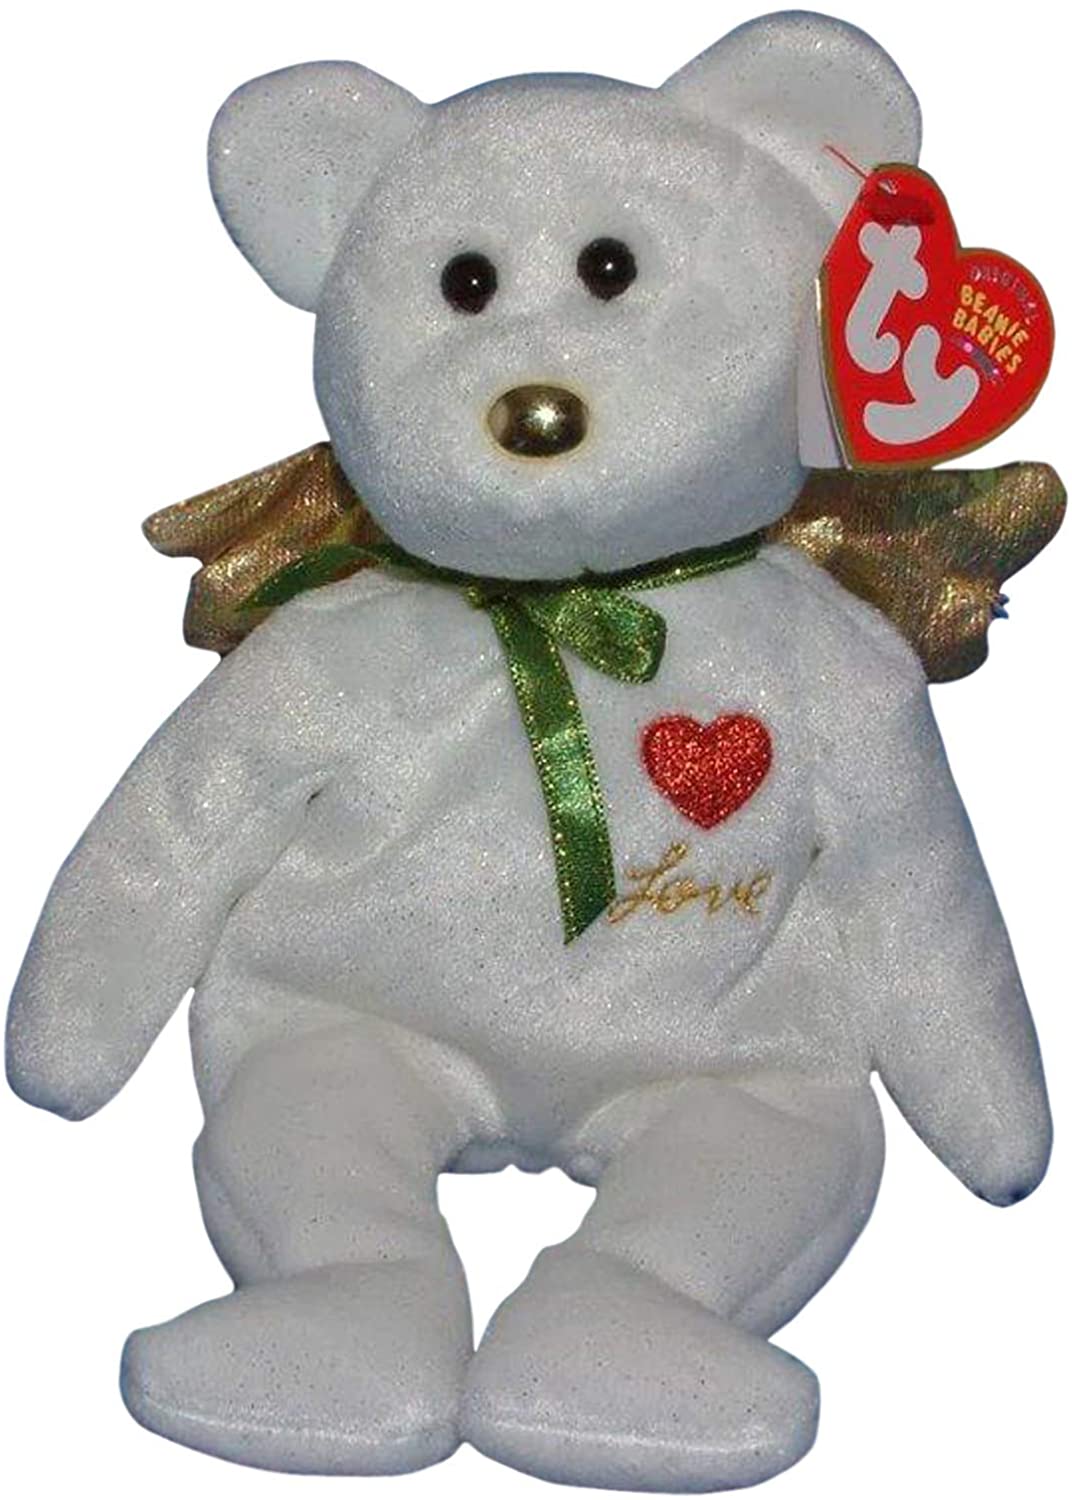 Beanie Baby: Gift (Love) the Bear (Hallmark Exclusive)